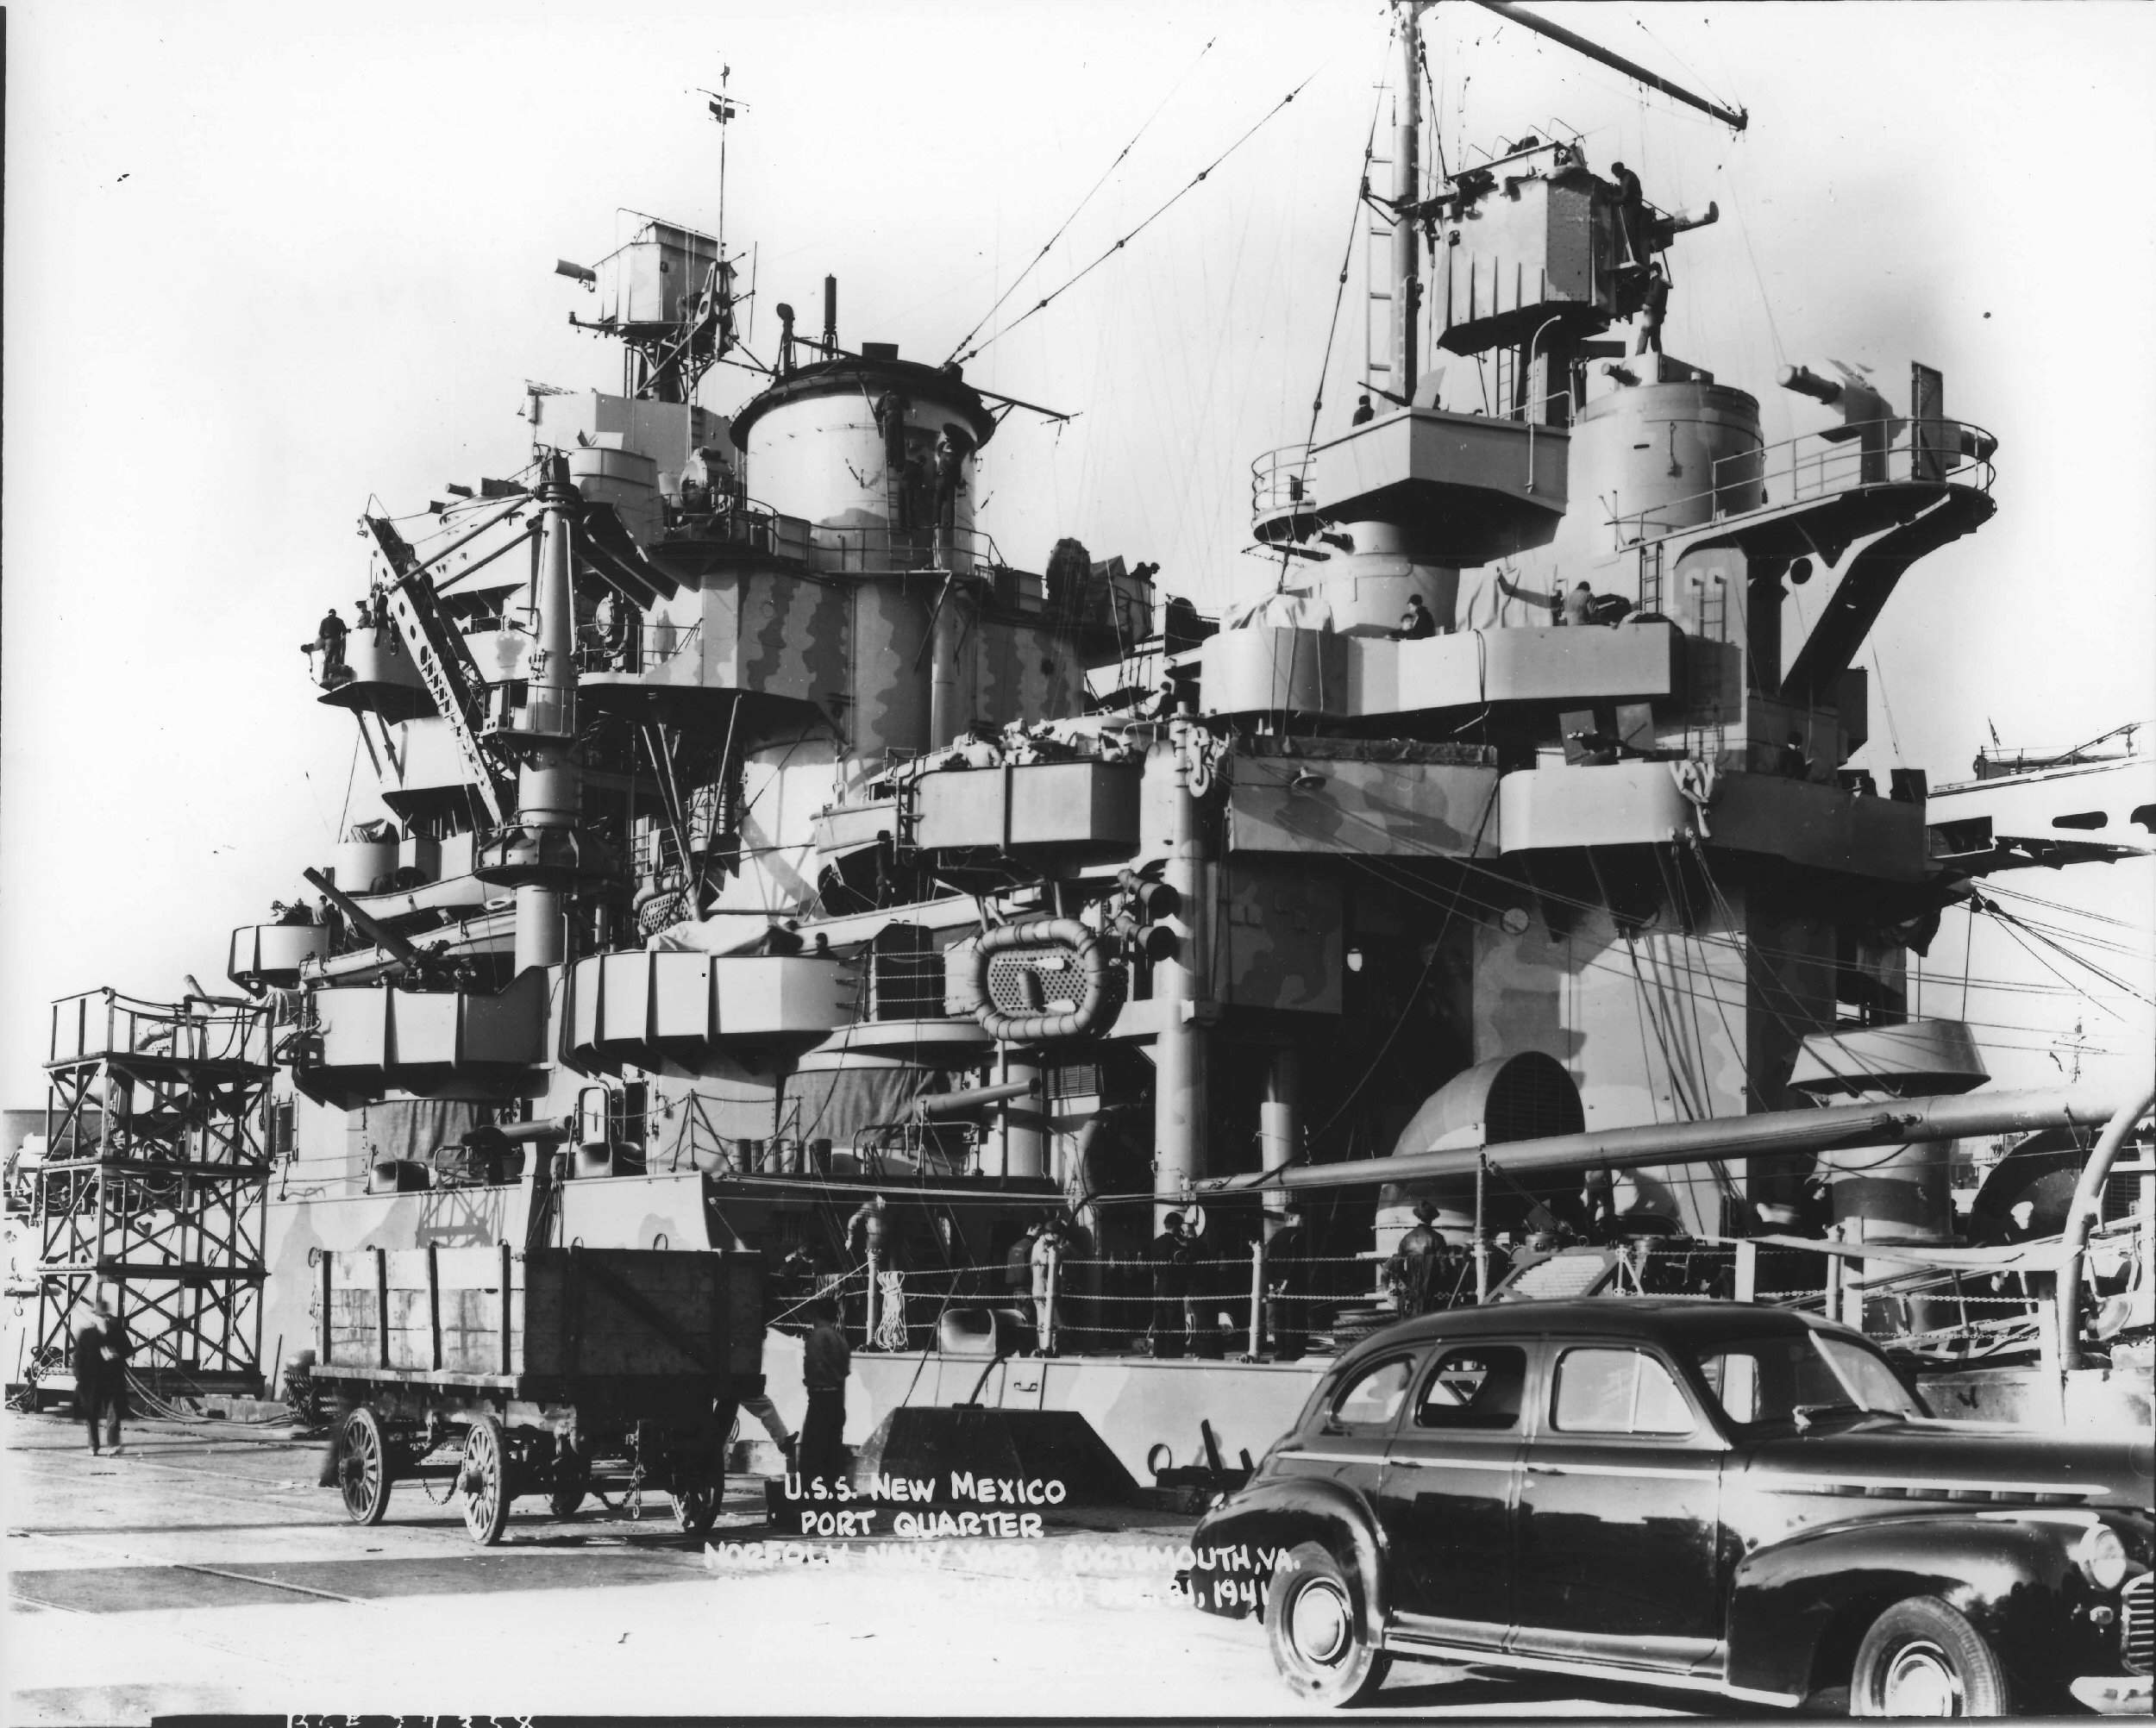 USS New Mexico, Norfolk Navy Yard, Portsmouth, Virginia, United States, 31 Dec 1941, photo 2 of 5